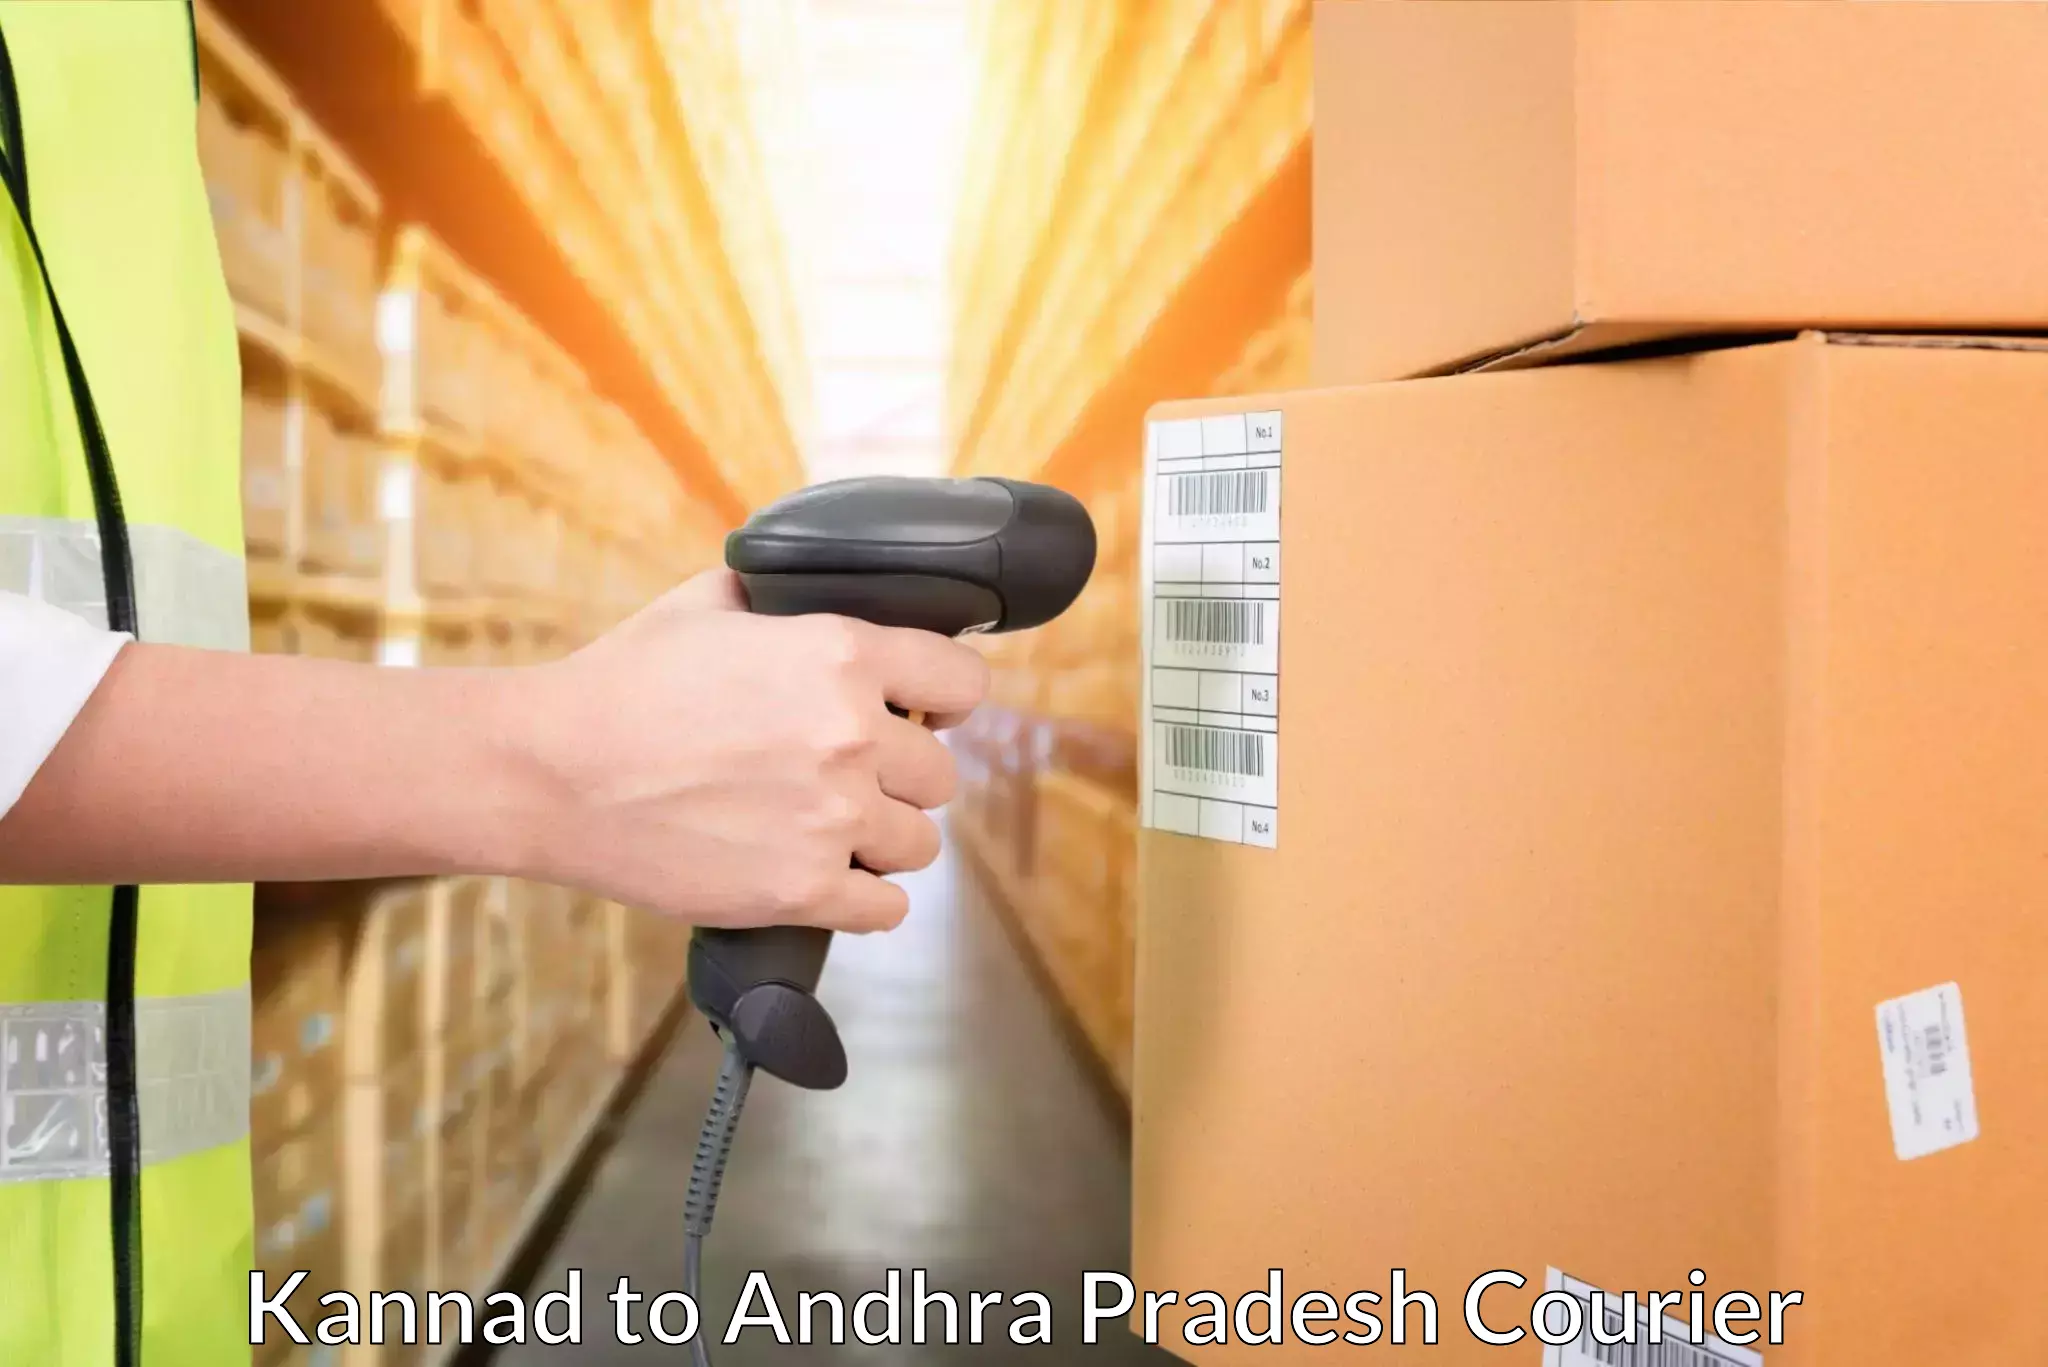 Efficient logistics management Kannad to Chodavaram